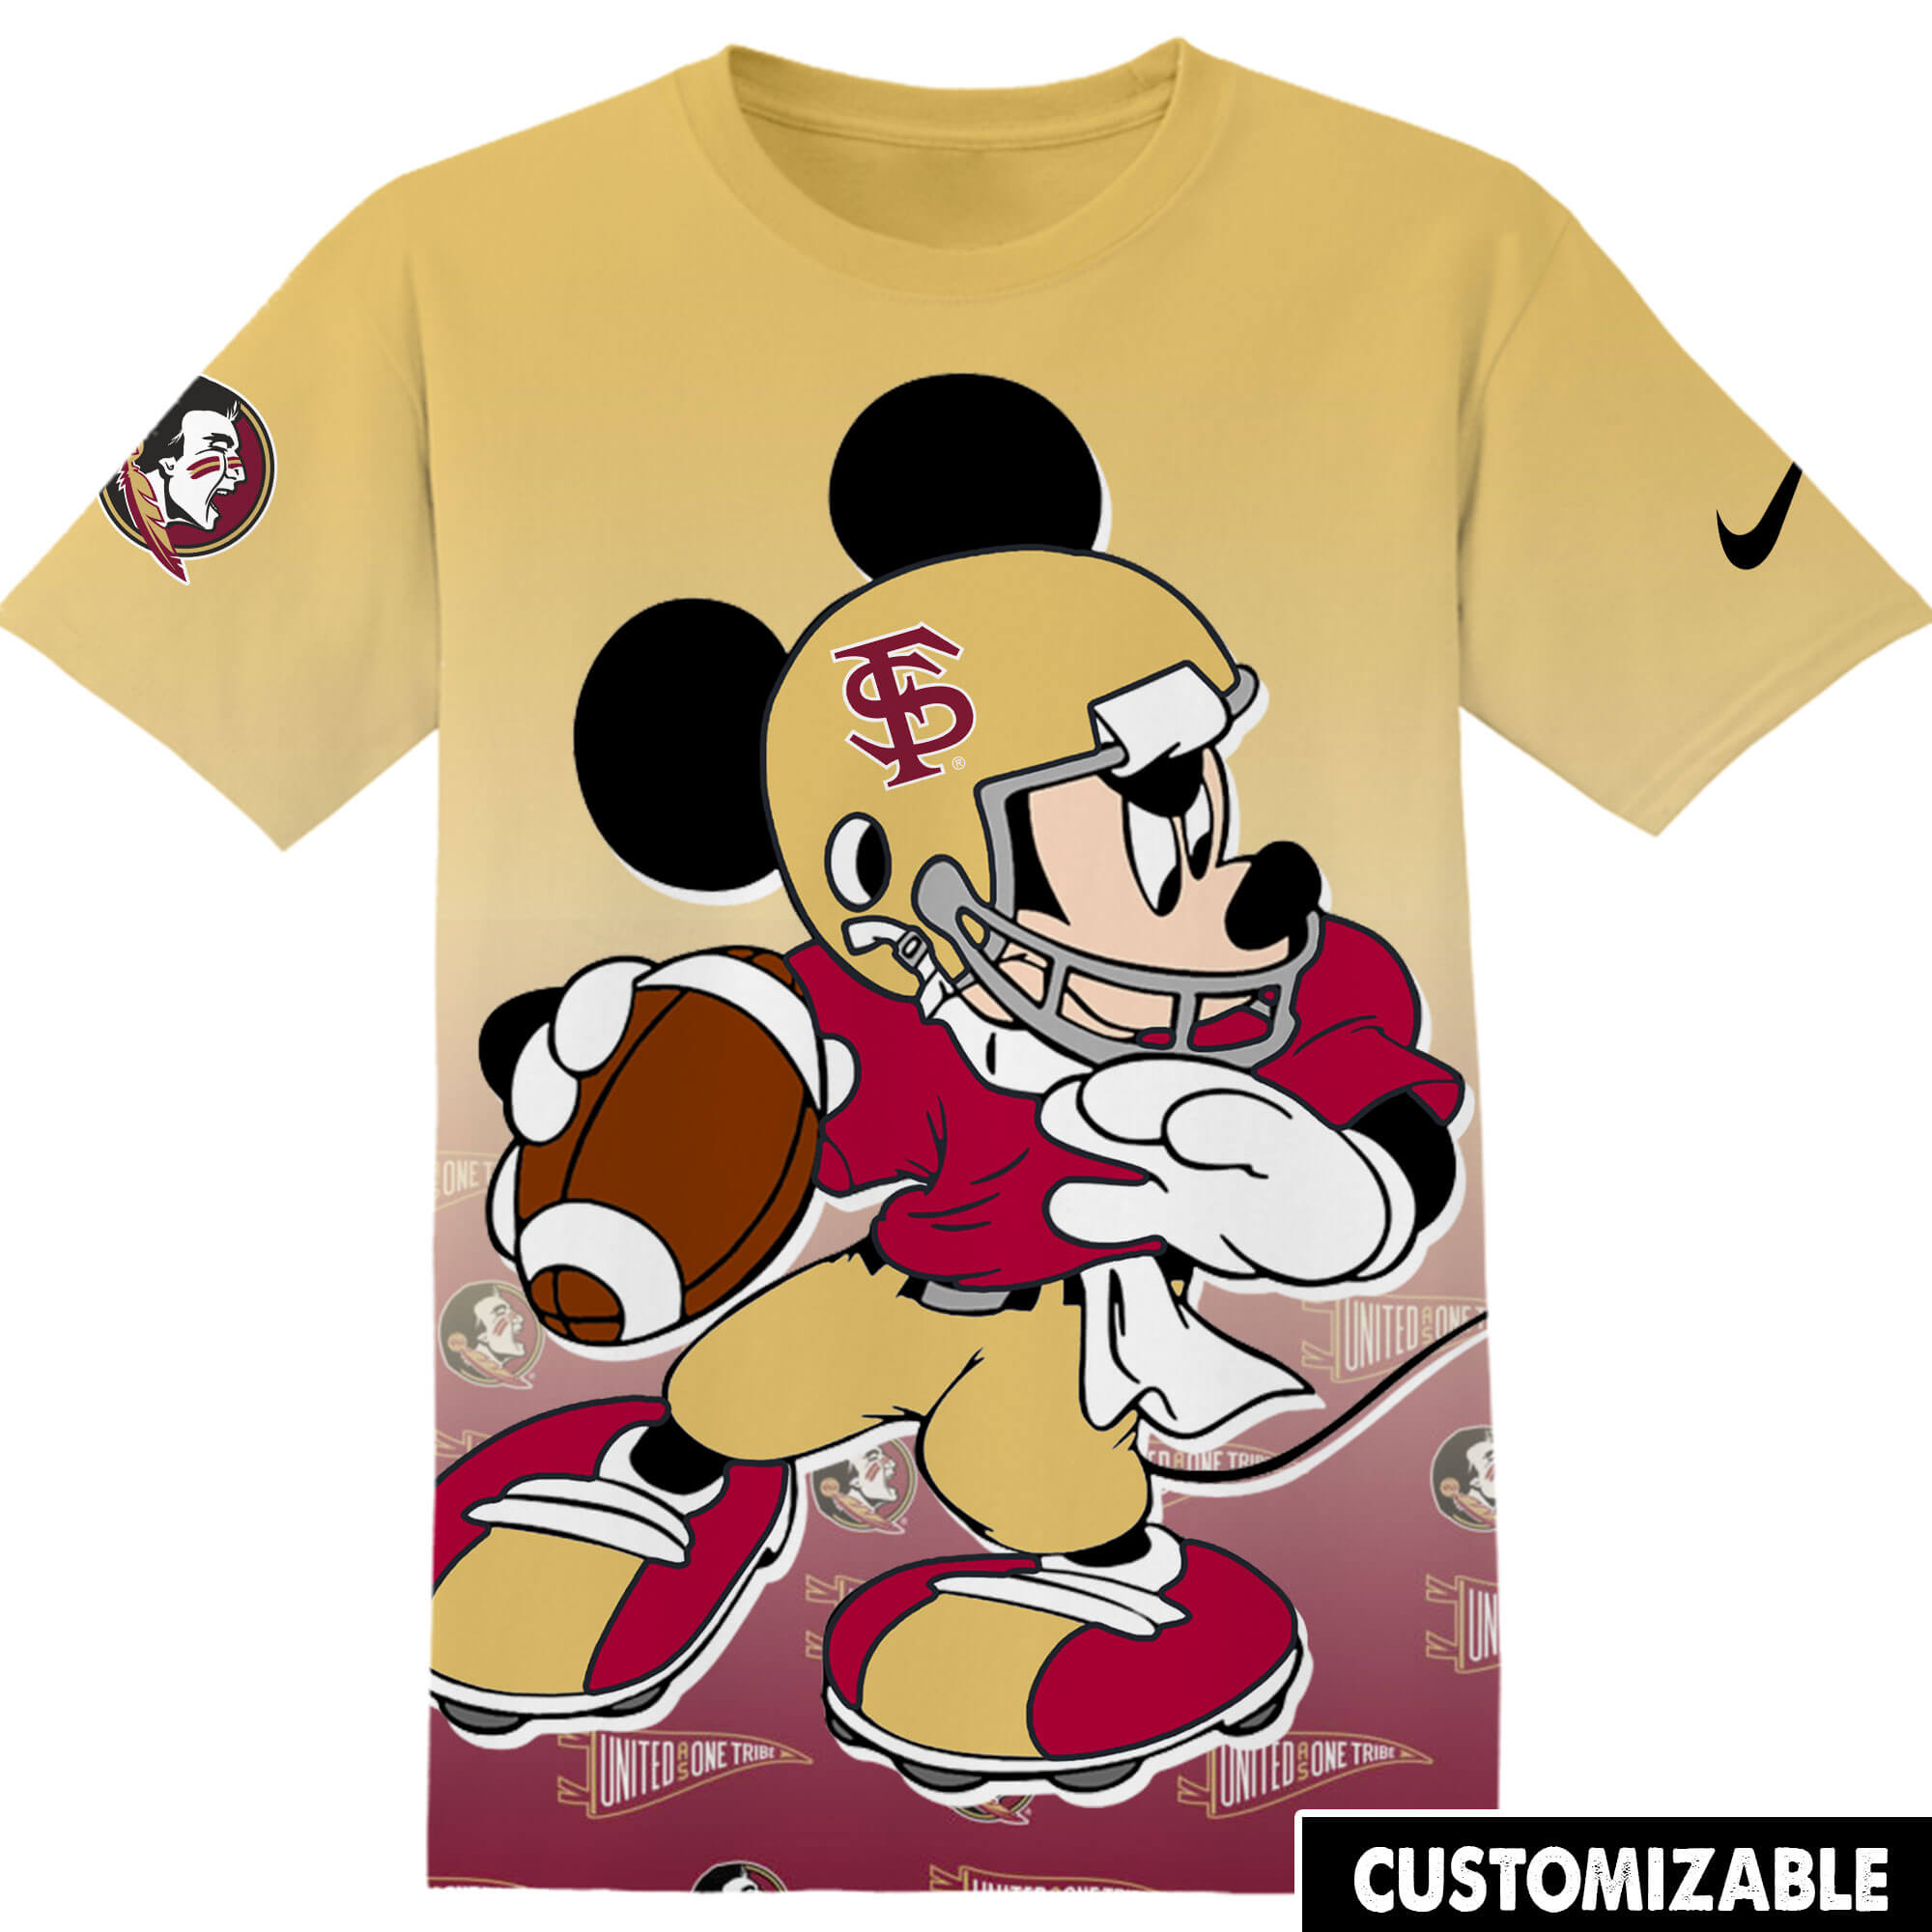 Customized NCAA Football Florida State Seminoles Mickey Shirt